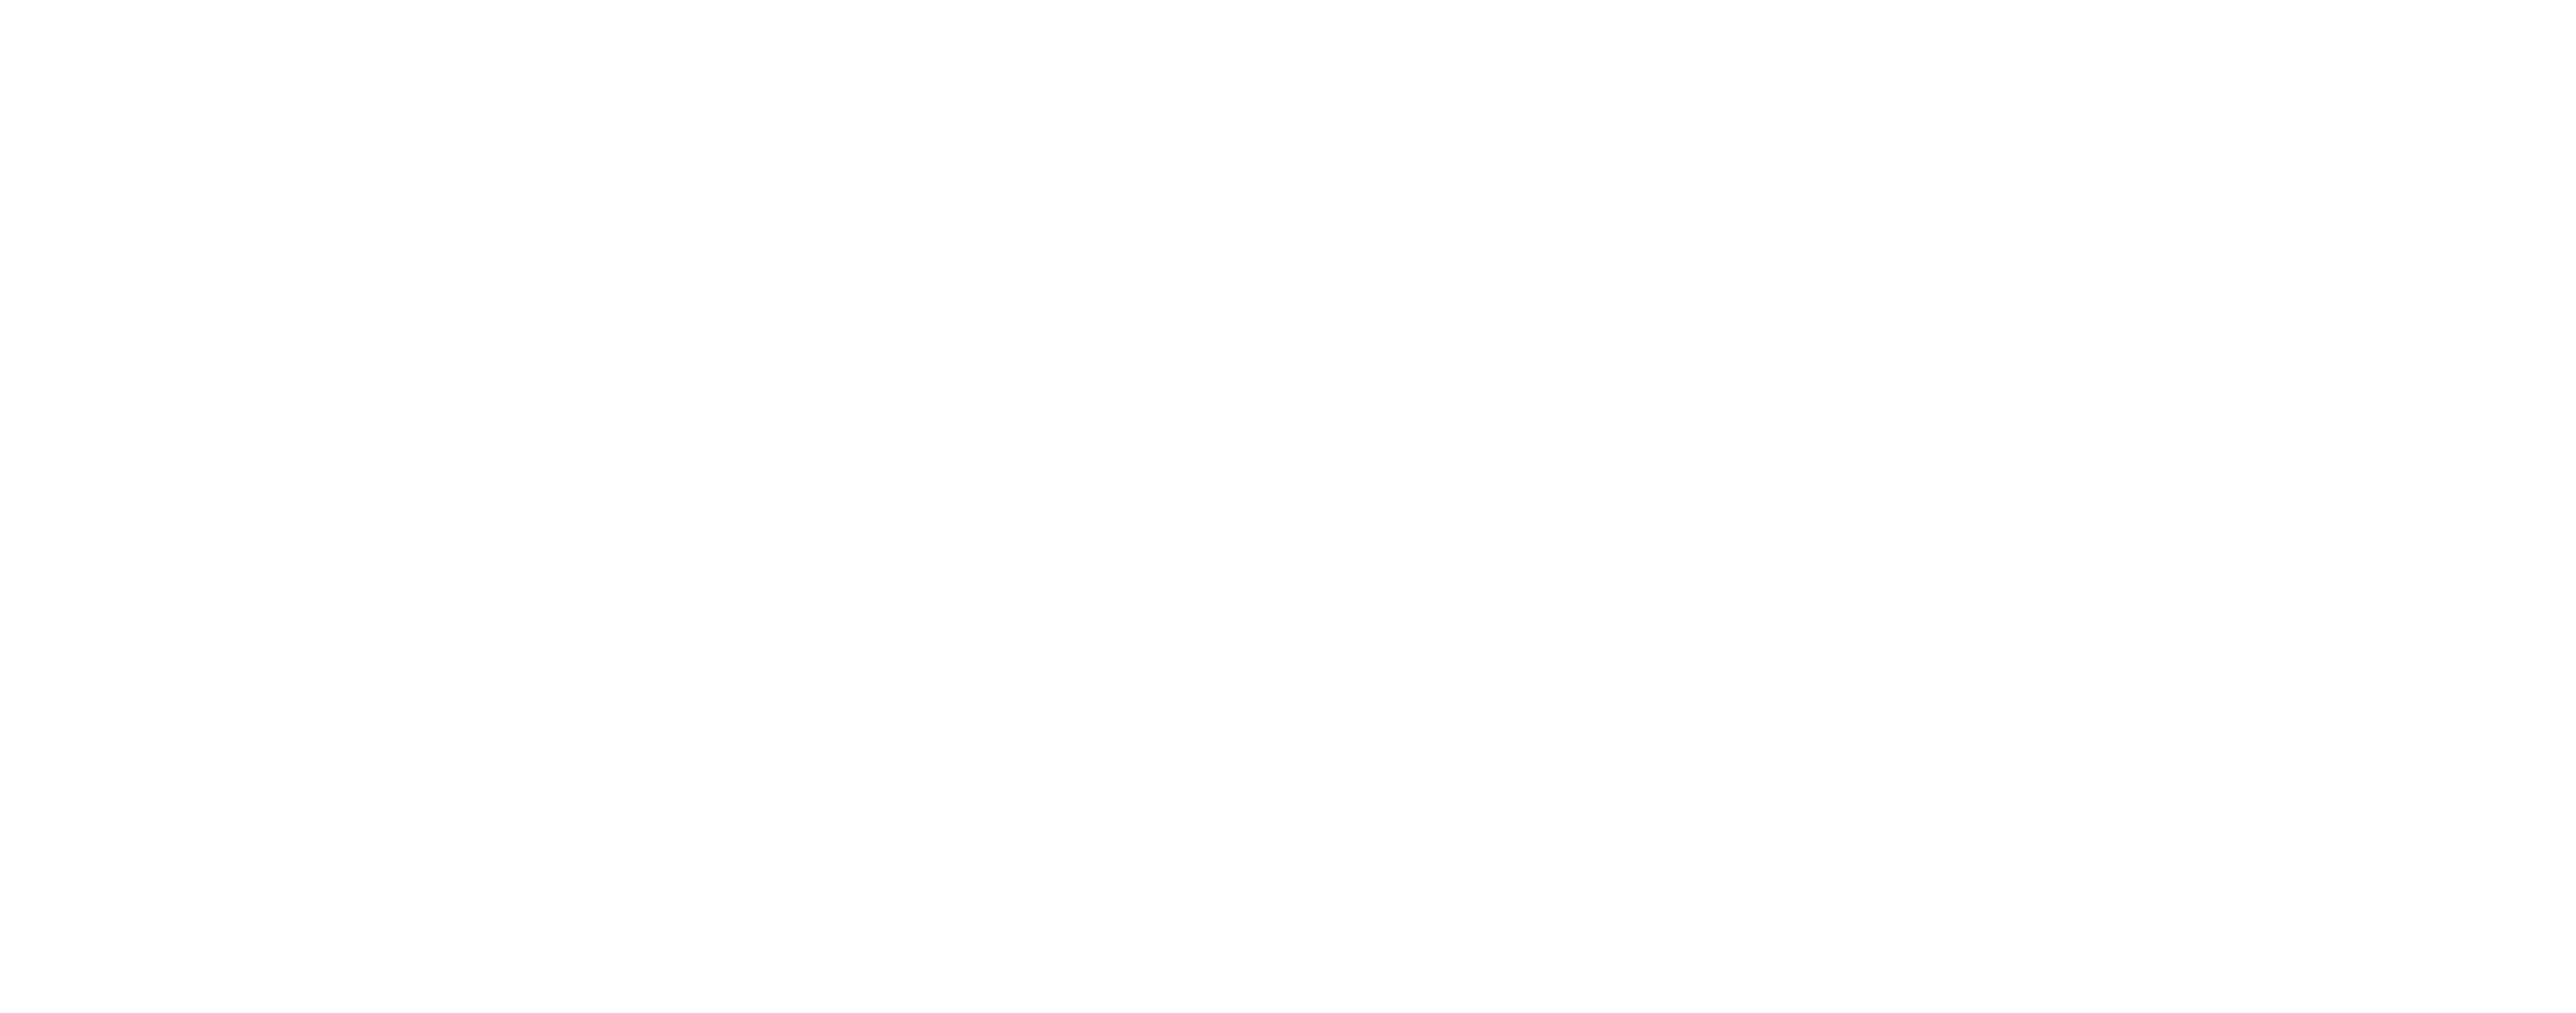 Logo mindworks GmbH